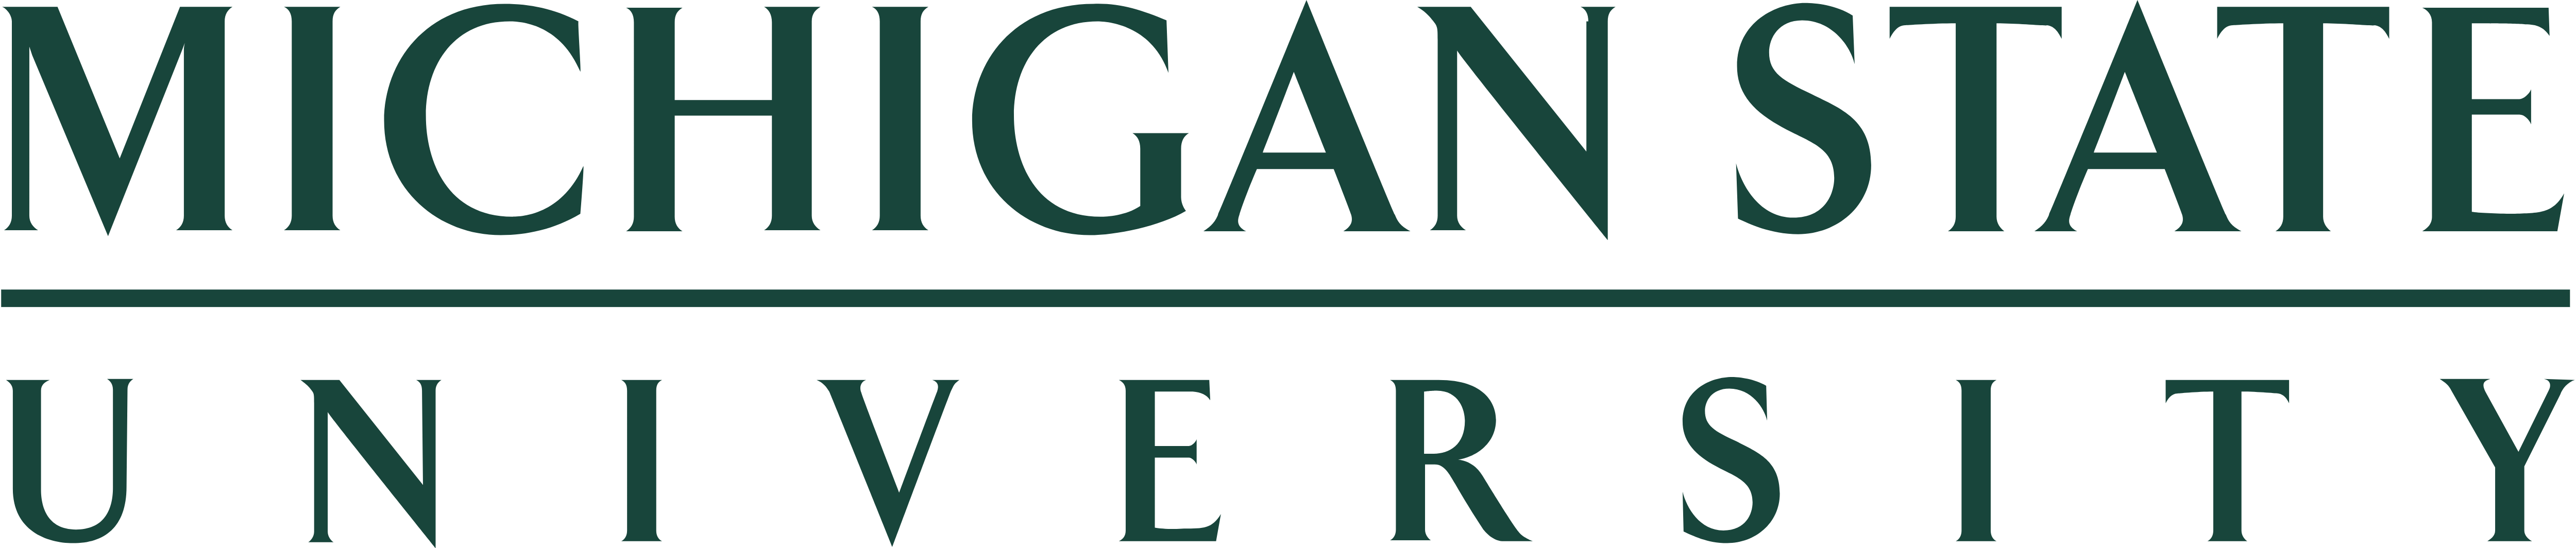 Michigan_State_University_logo_green